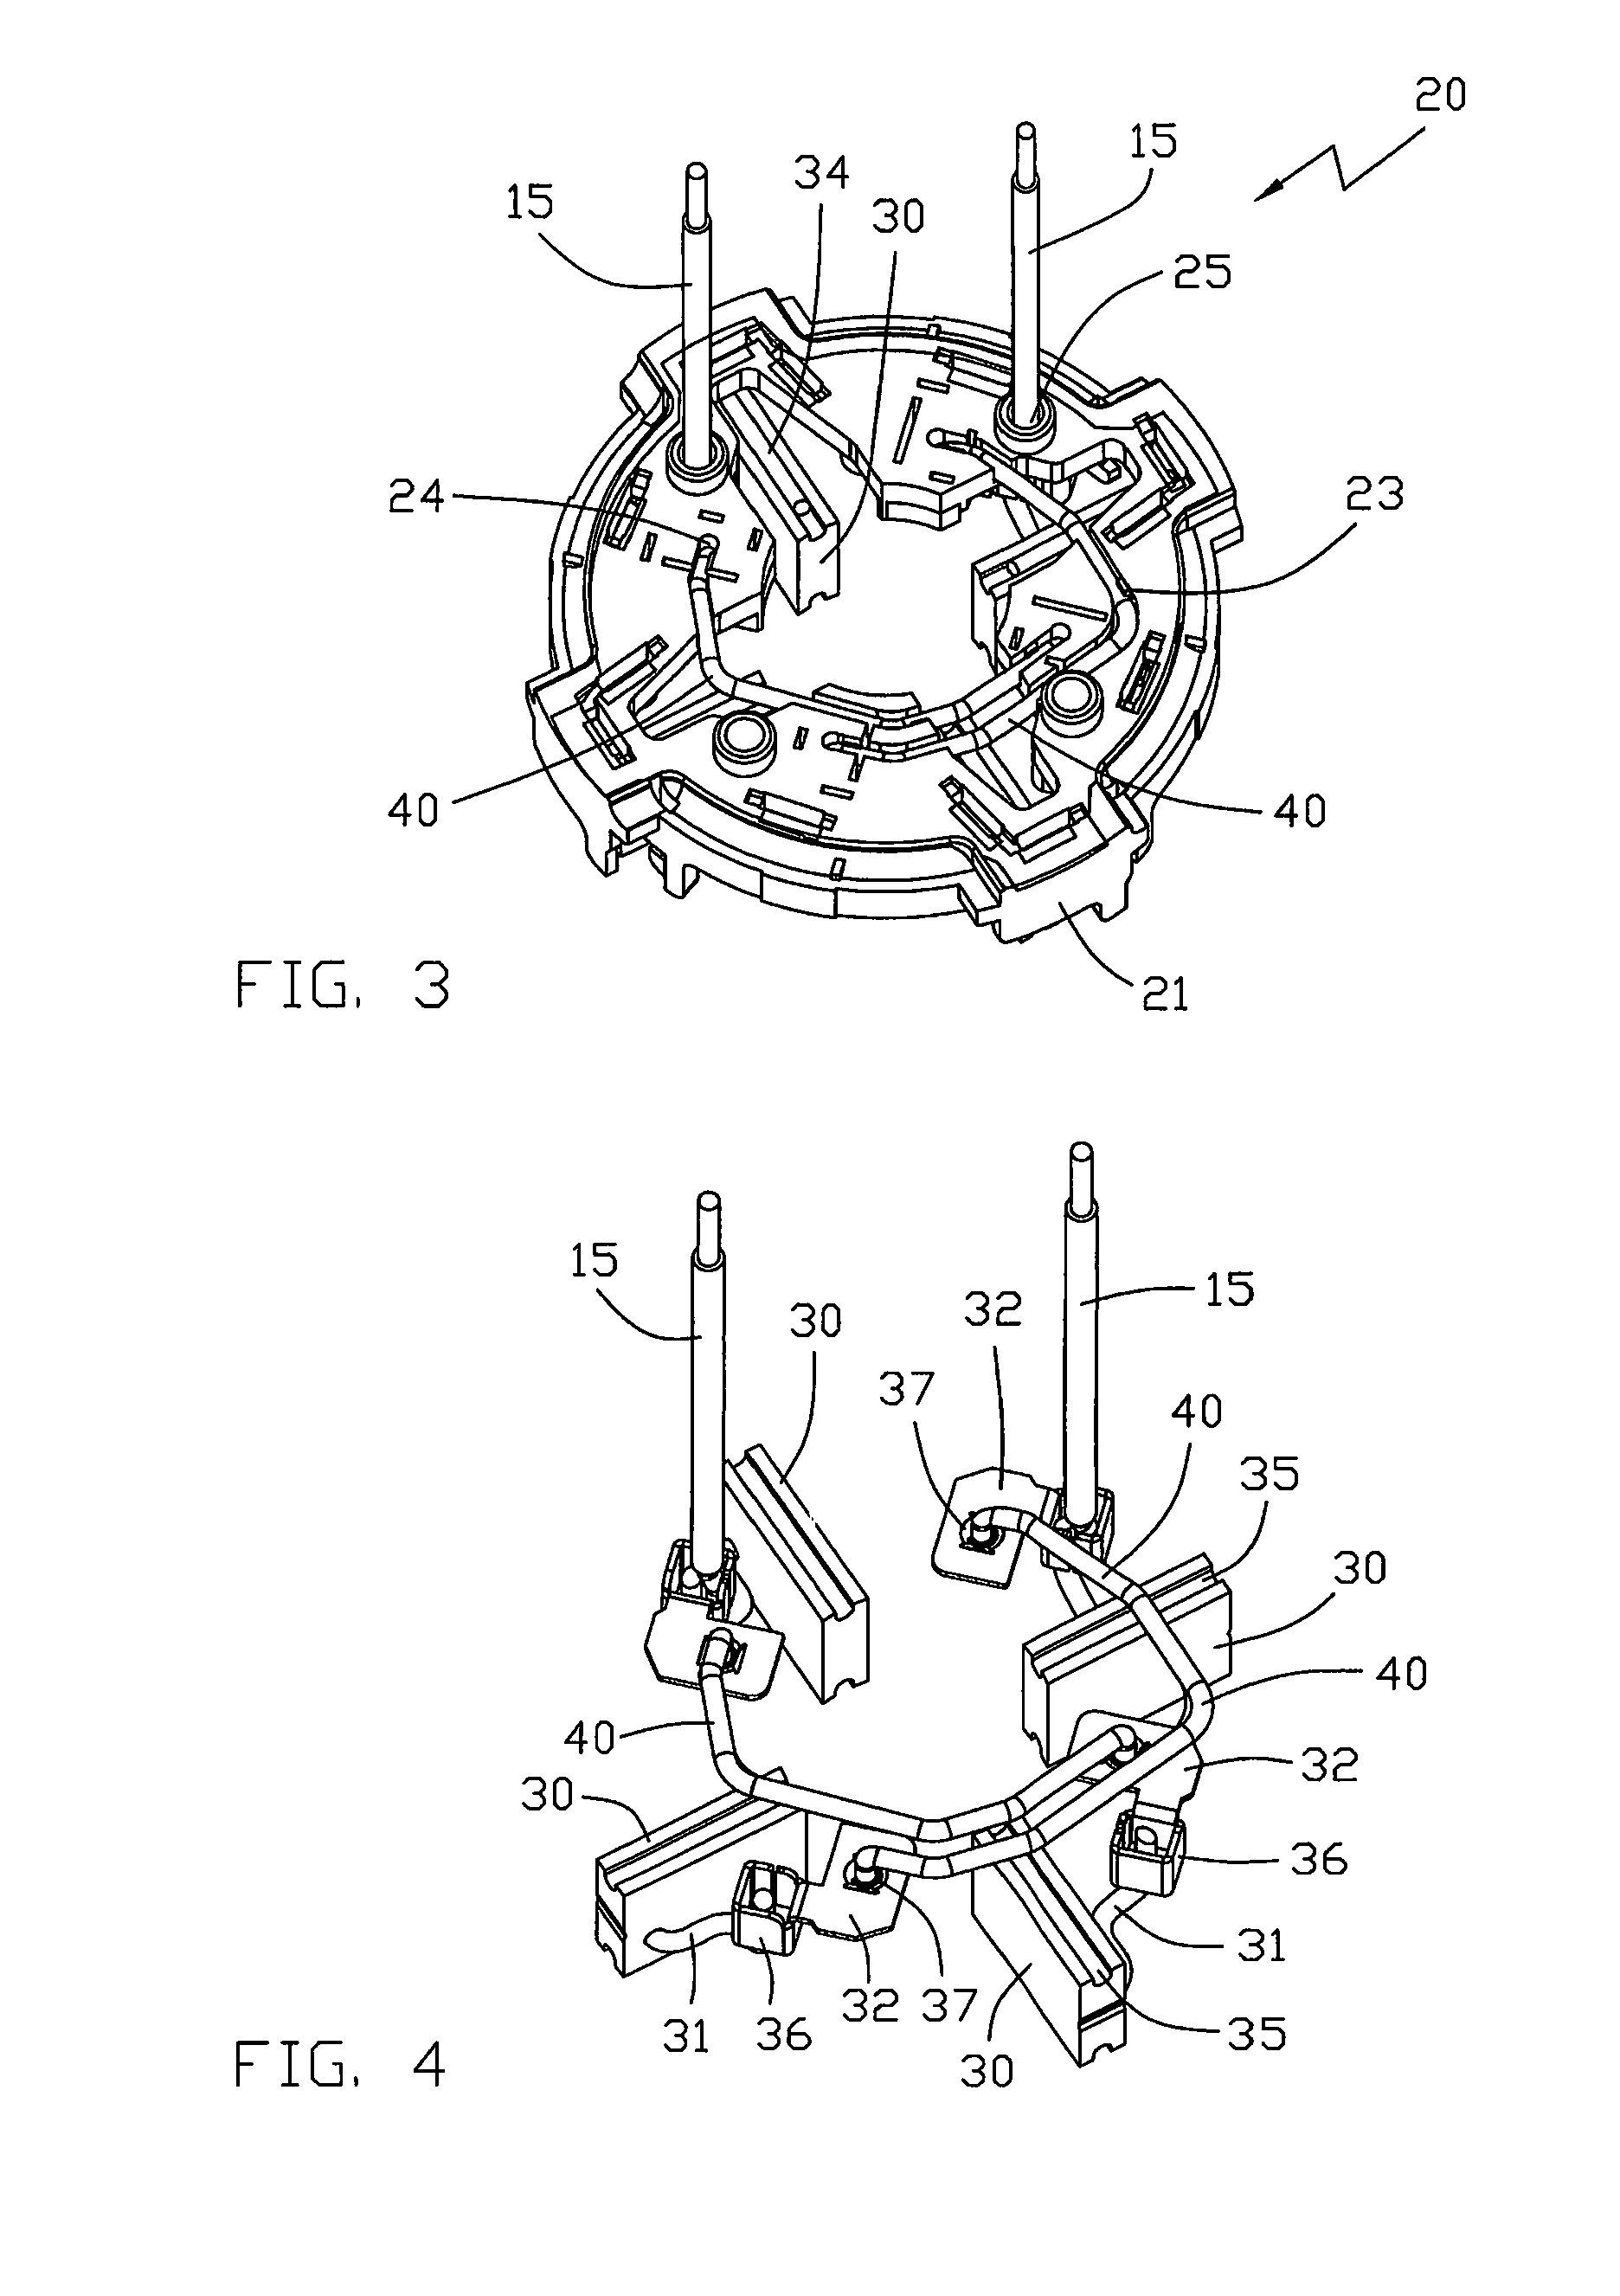 Brush gear of a motor